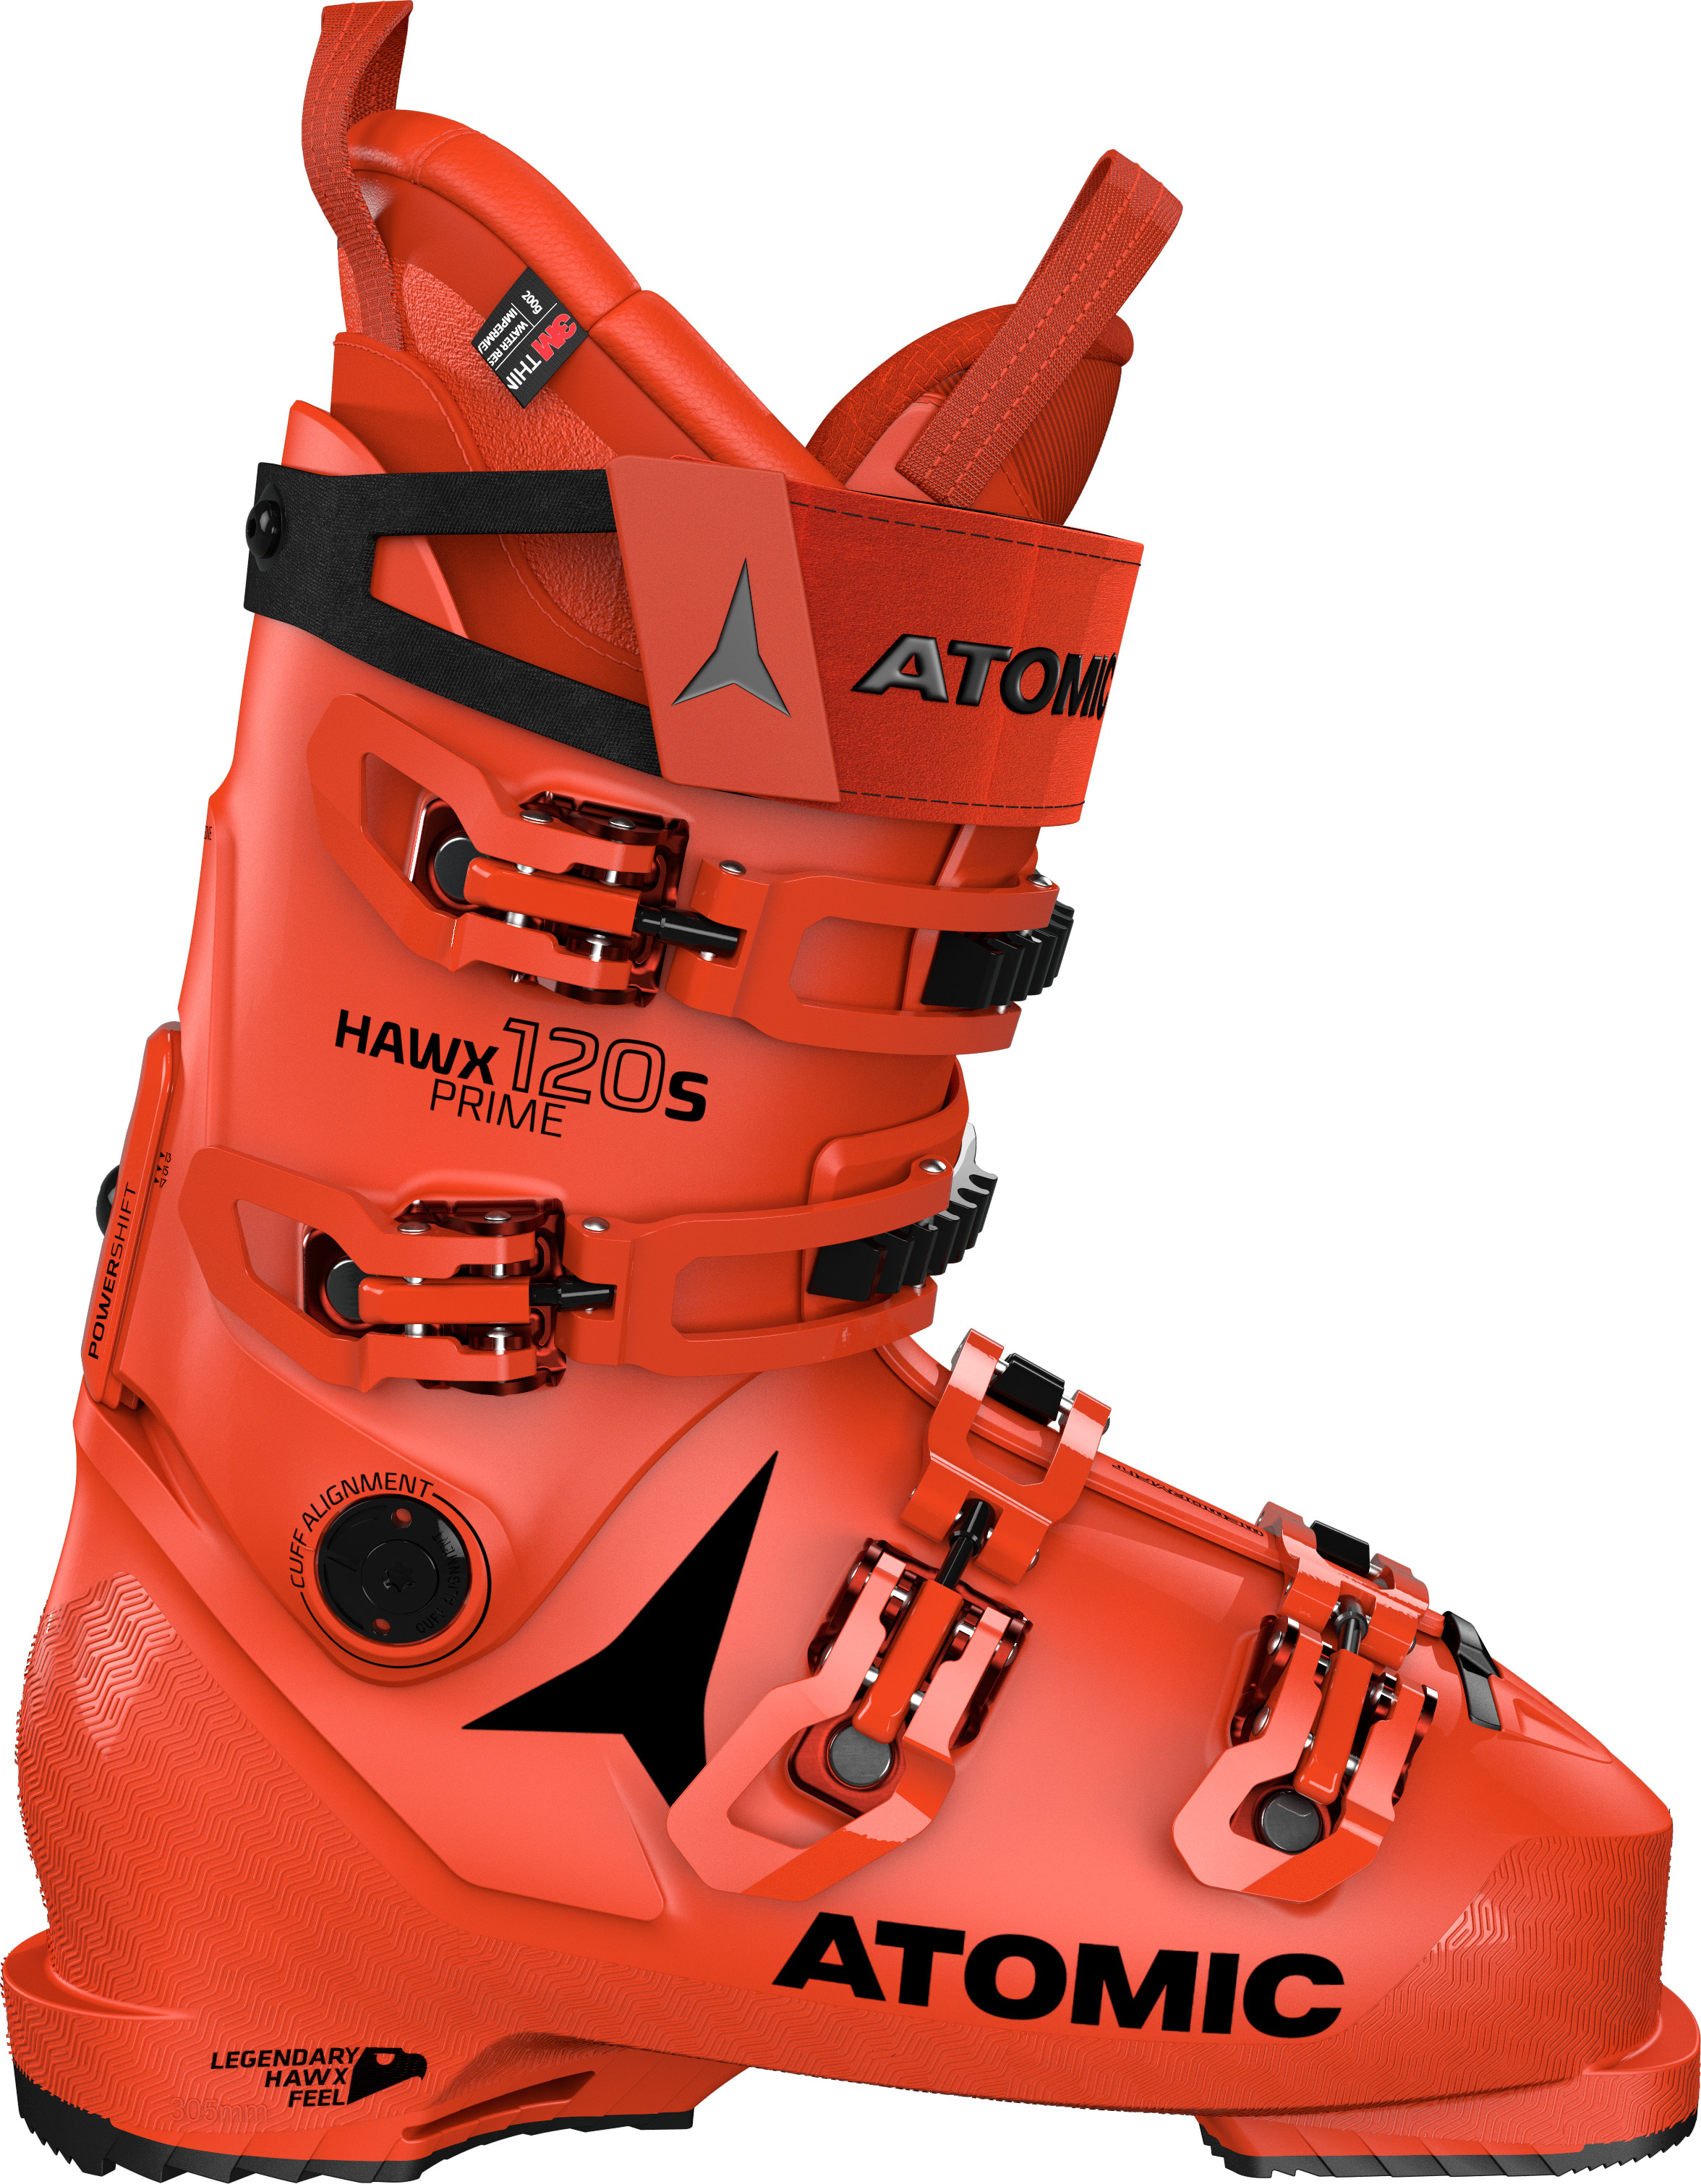 ATOMIC Hawx Prime 120S Red sícipő 